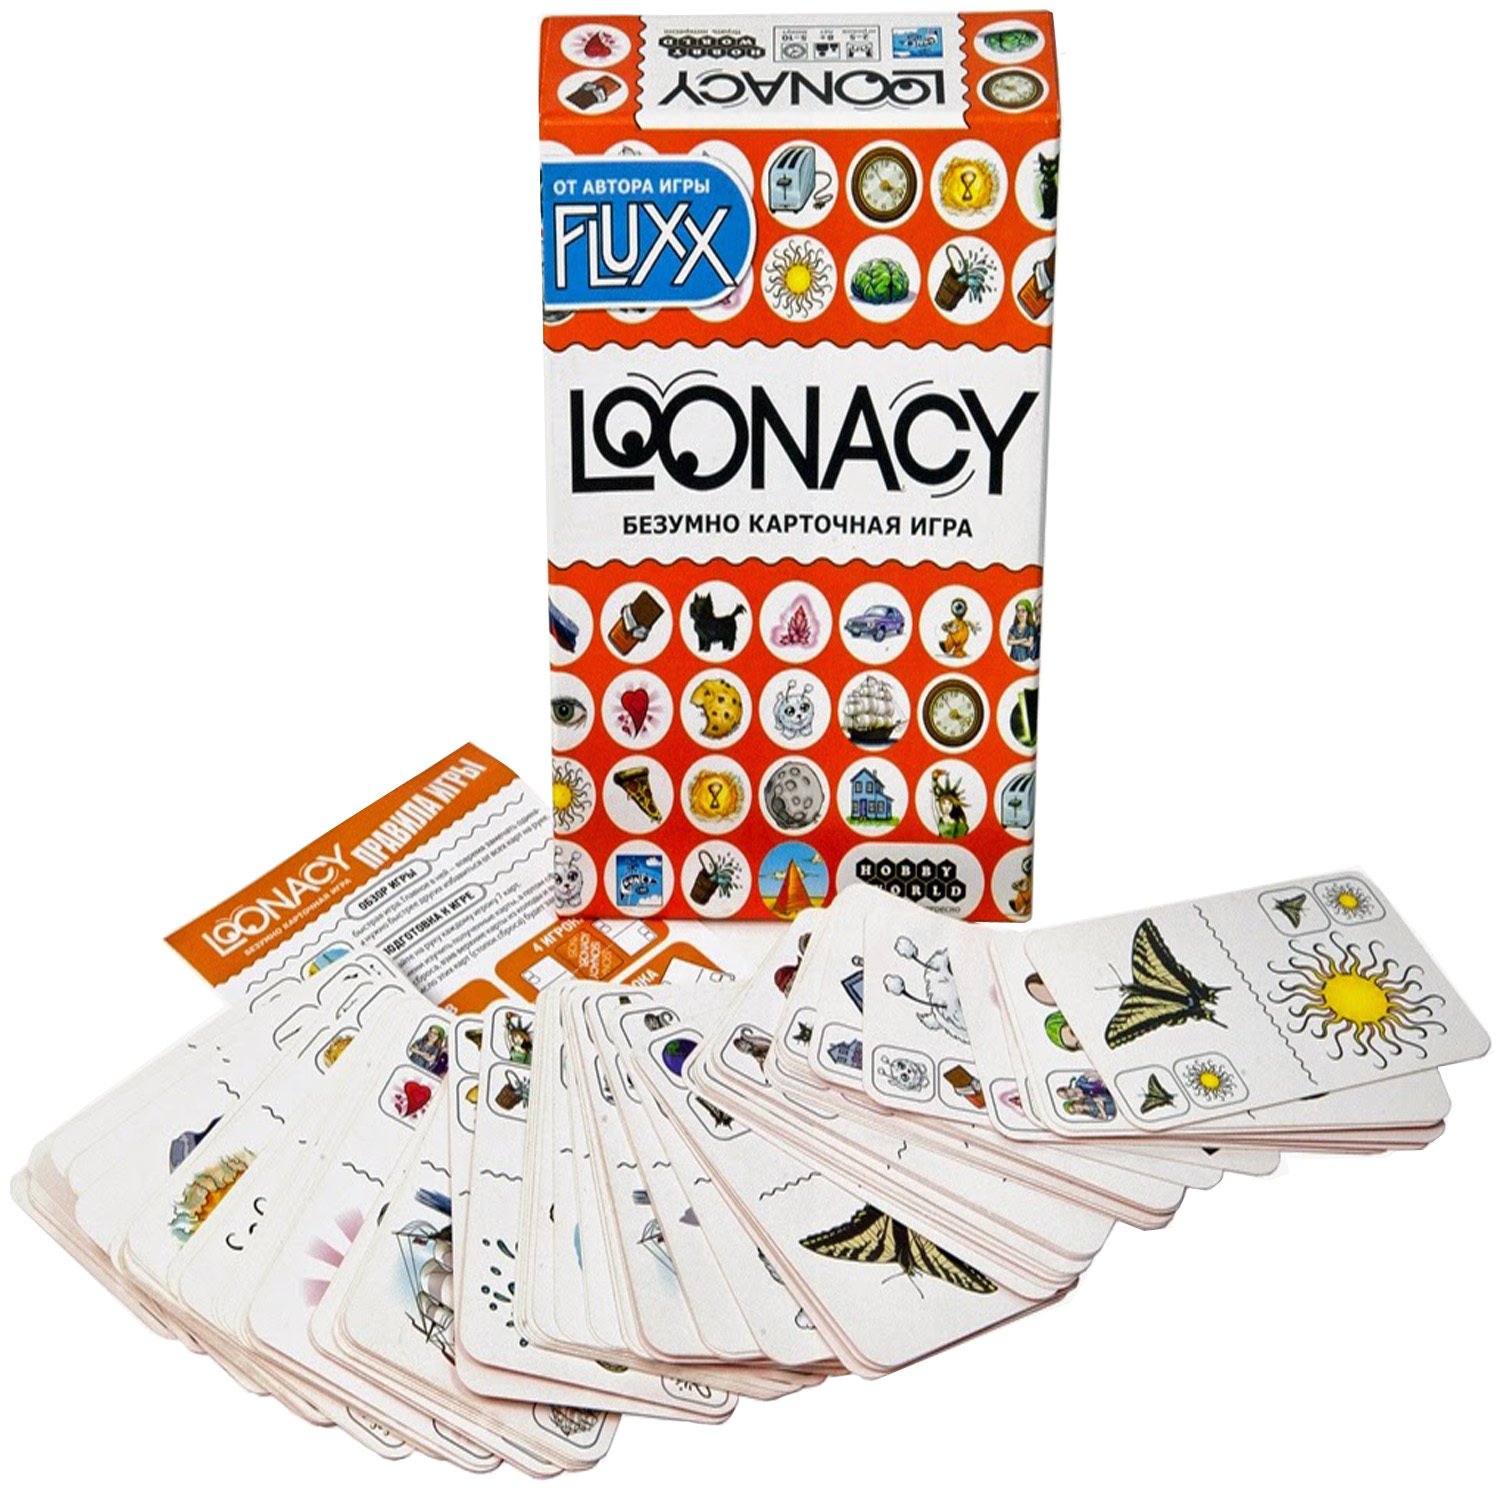 Коврик лунаси. Игра Loonacy. Настольная игра "Loonacy". Мир хобби: Loonacy. Безумно карточная игра.